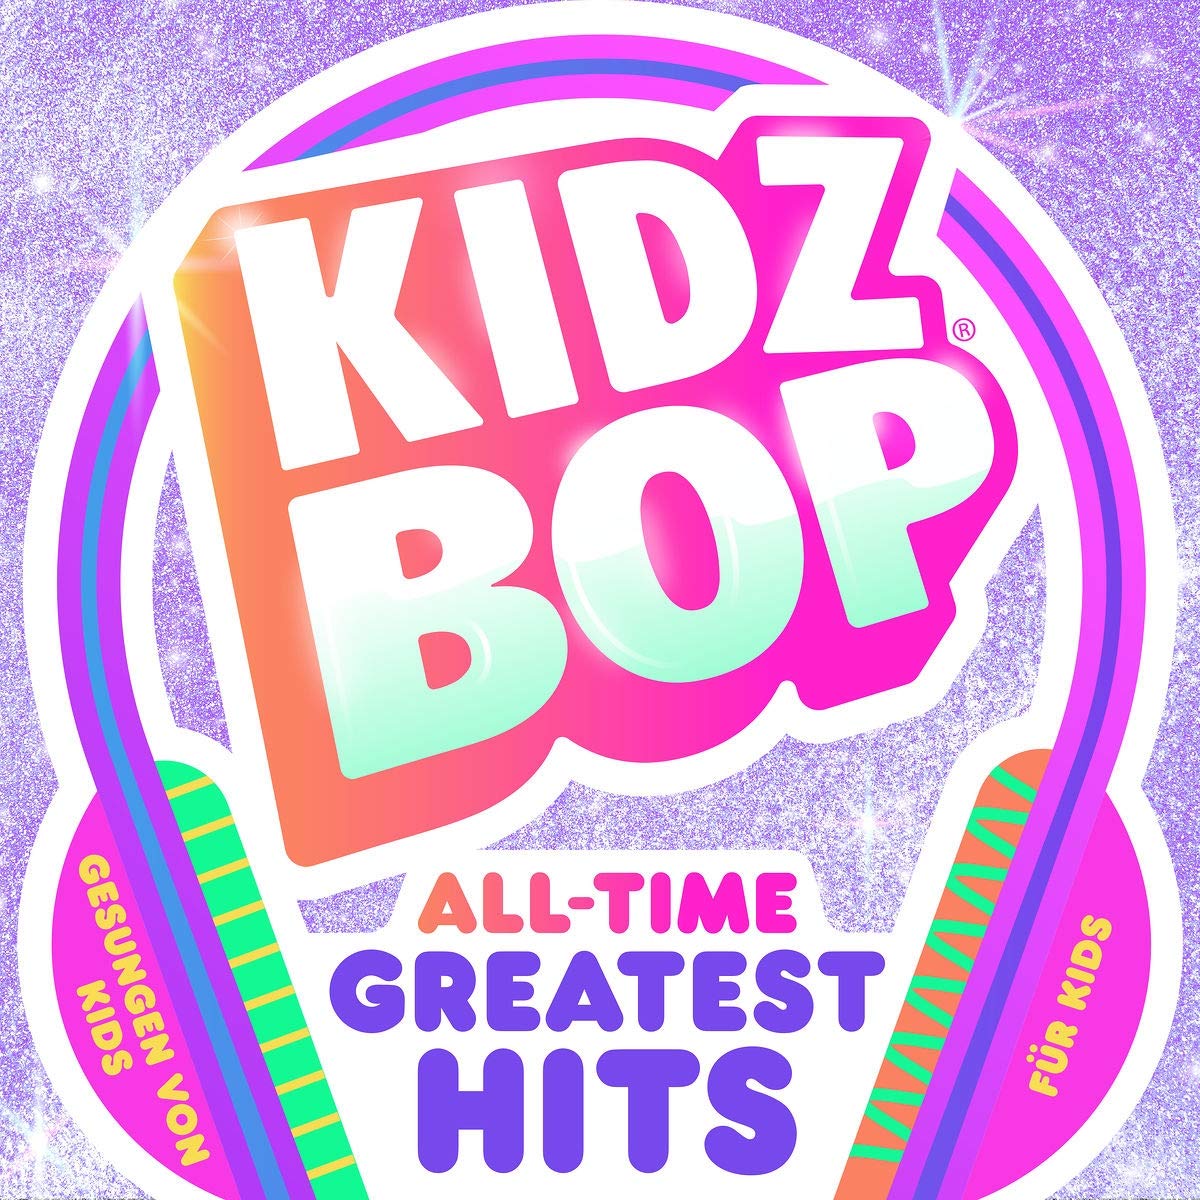 Kidz Bop „AllTime Greatest Hits“